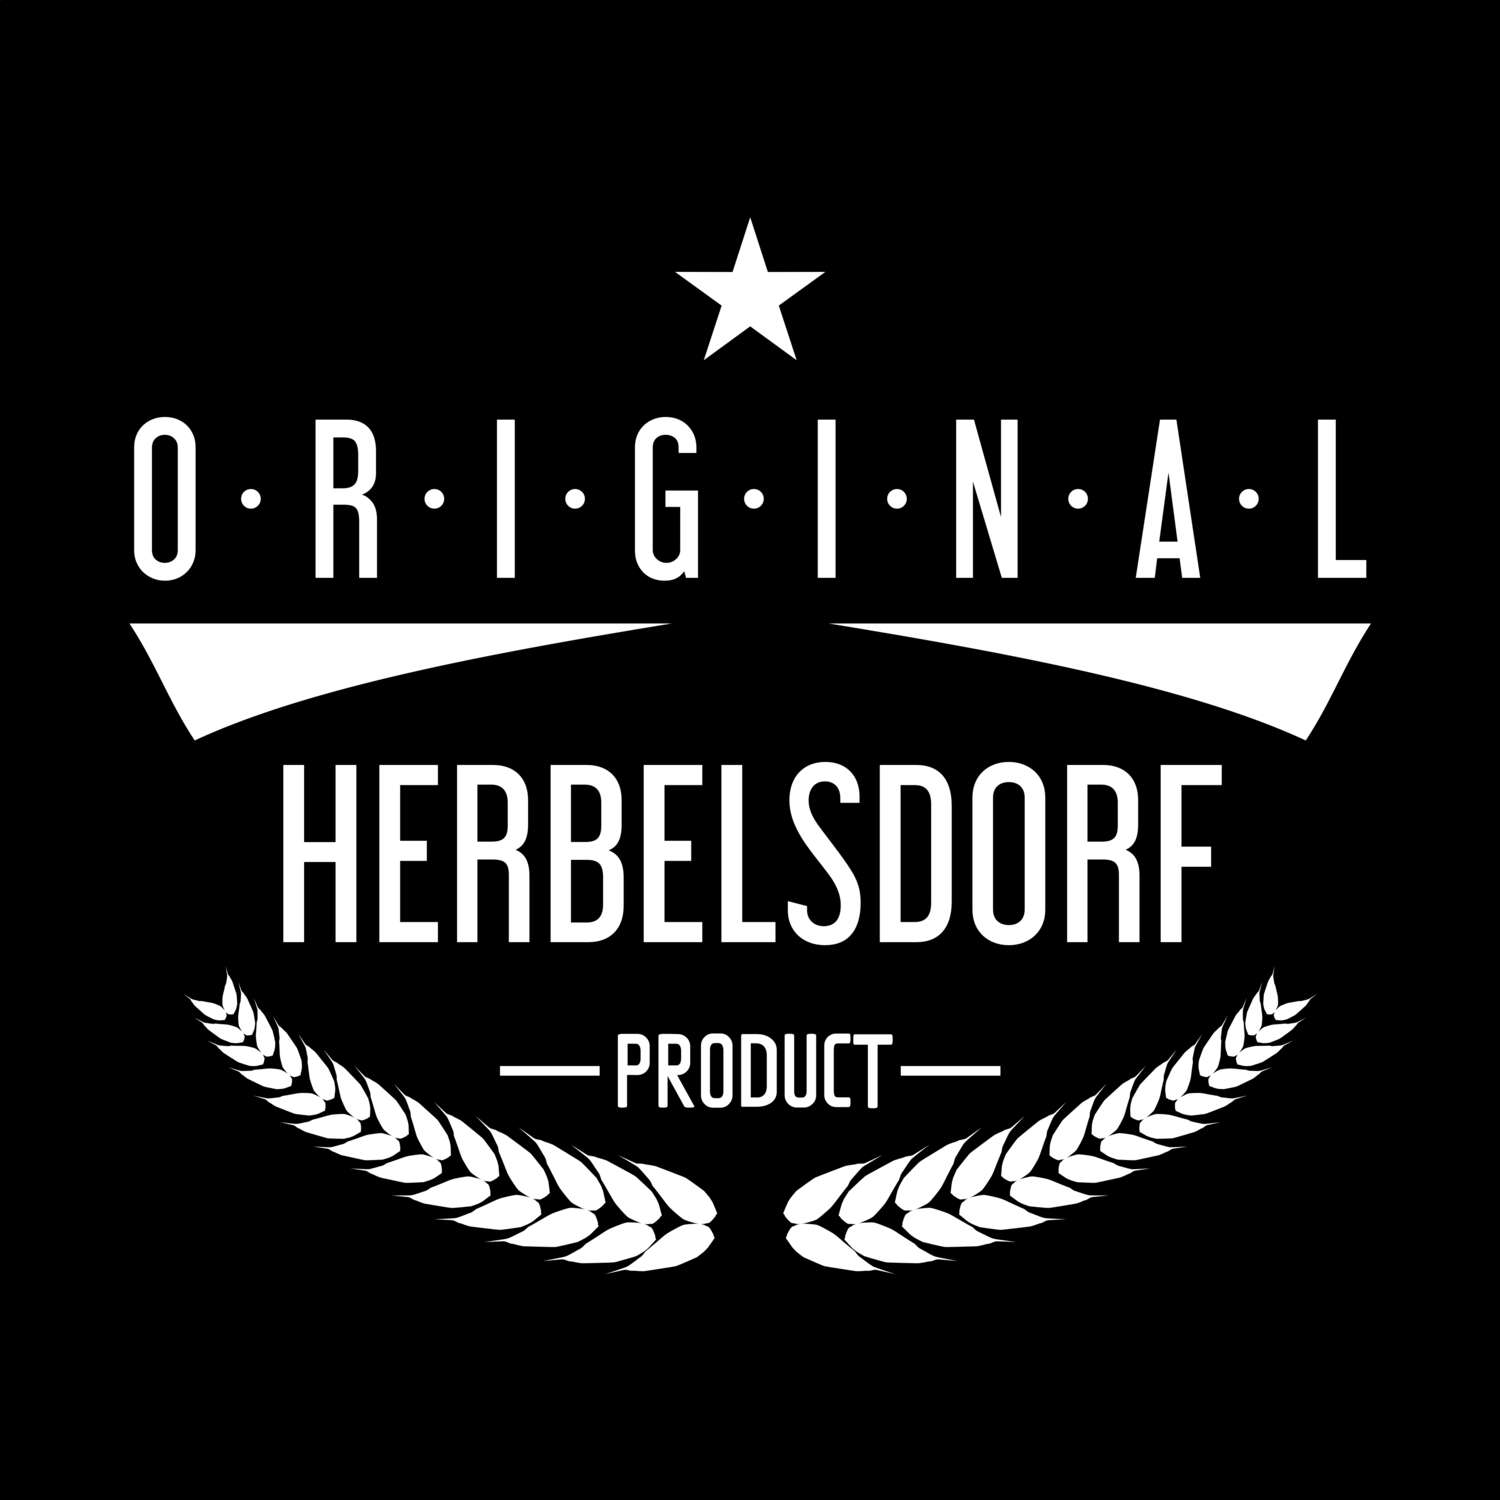 Herbelsdorf T-Shirt »Original Product«